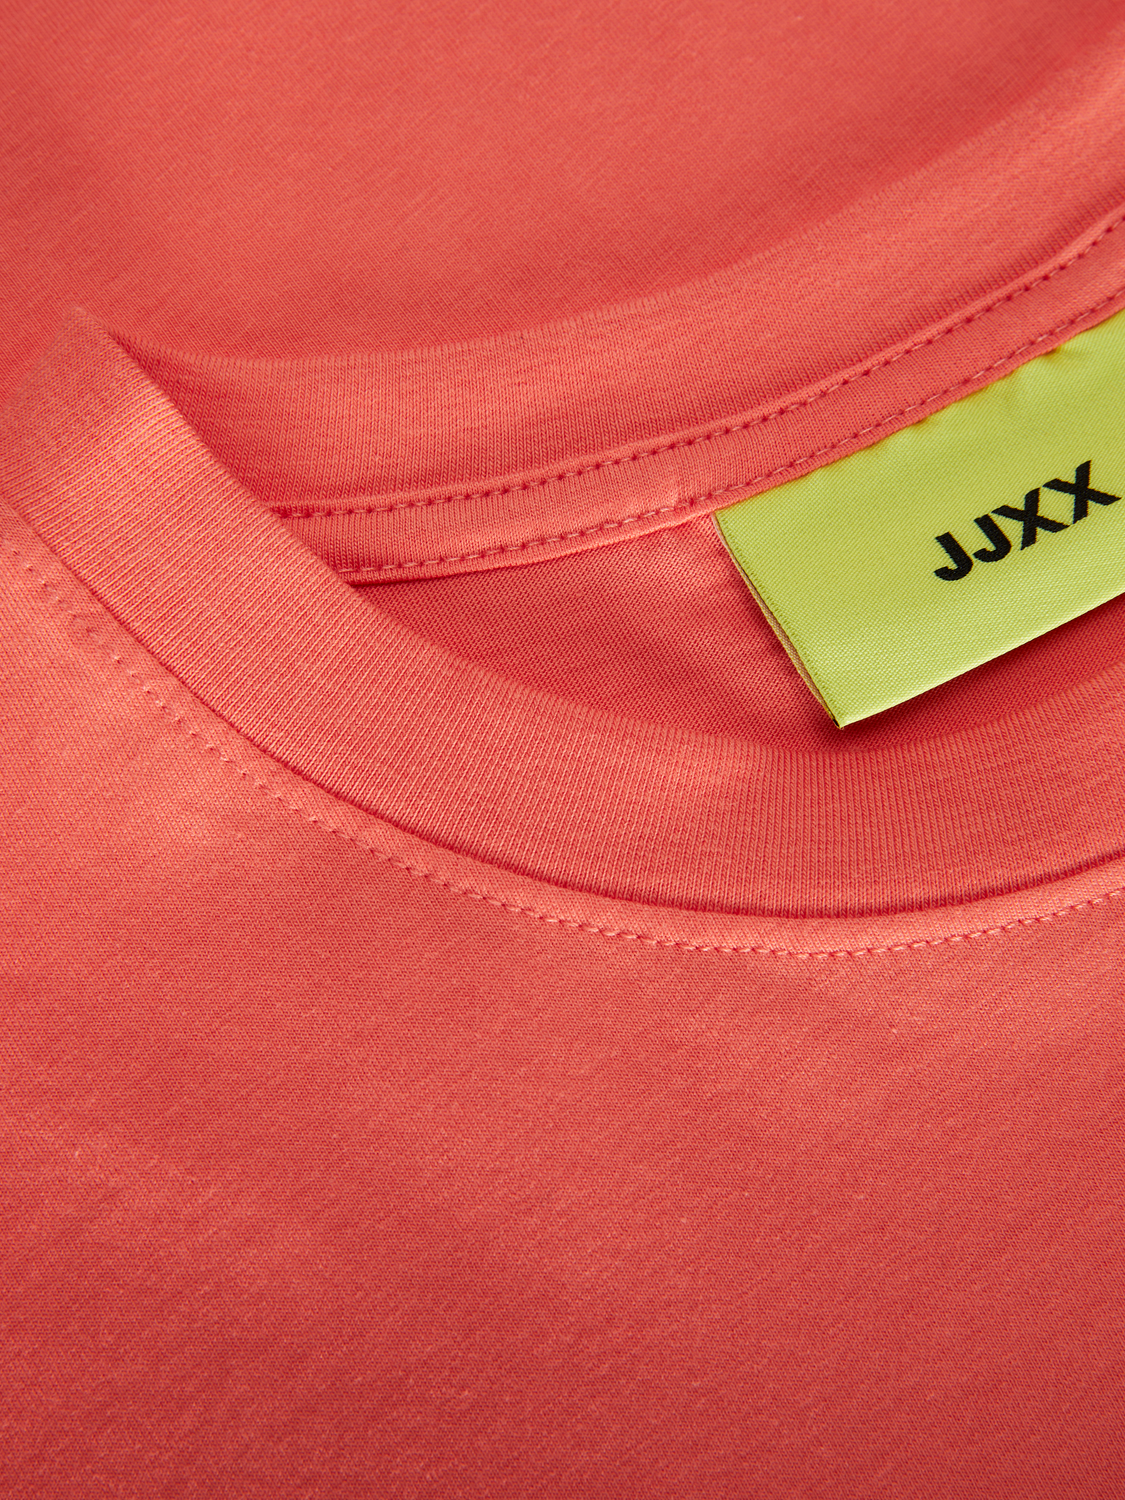 JJXX Καλοκαιρινό μπλουζάκι -Peach Echo  - 12206974